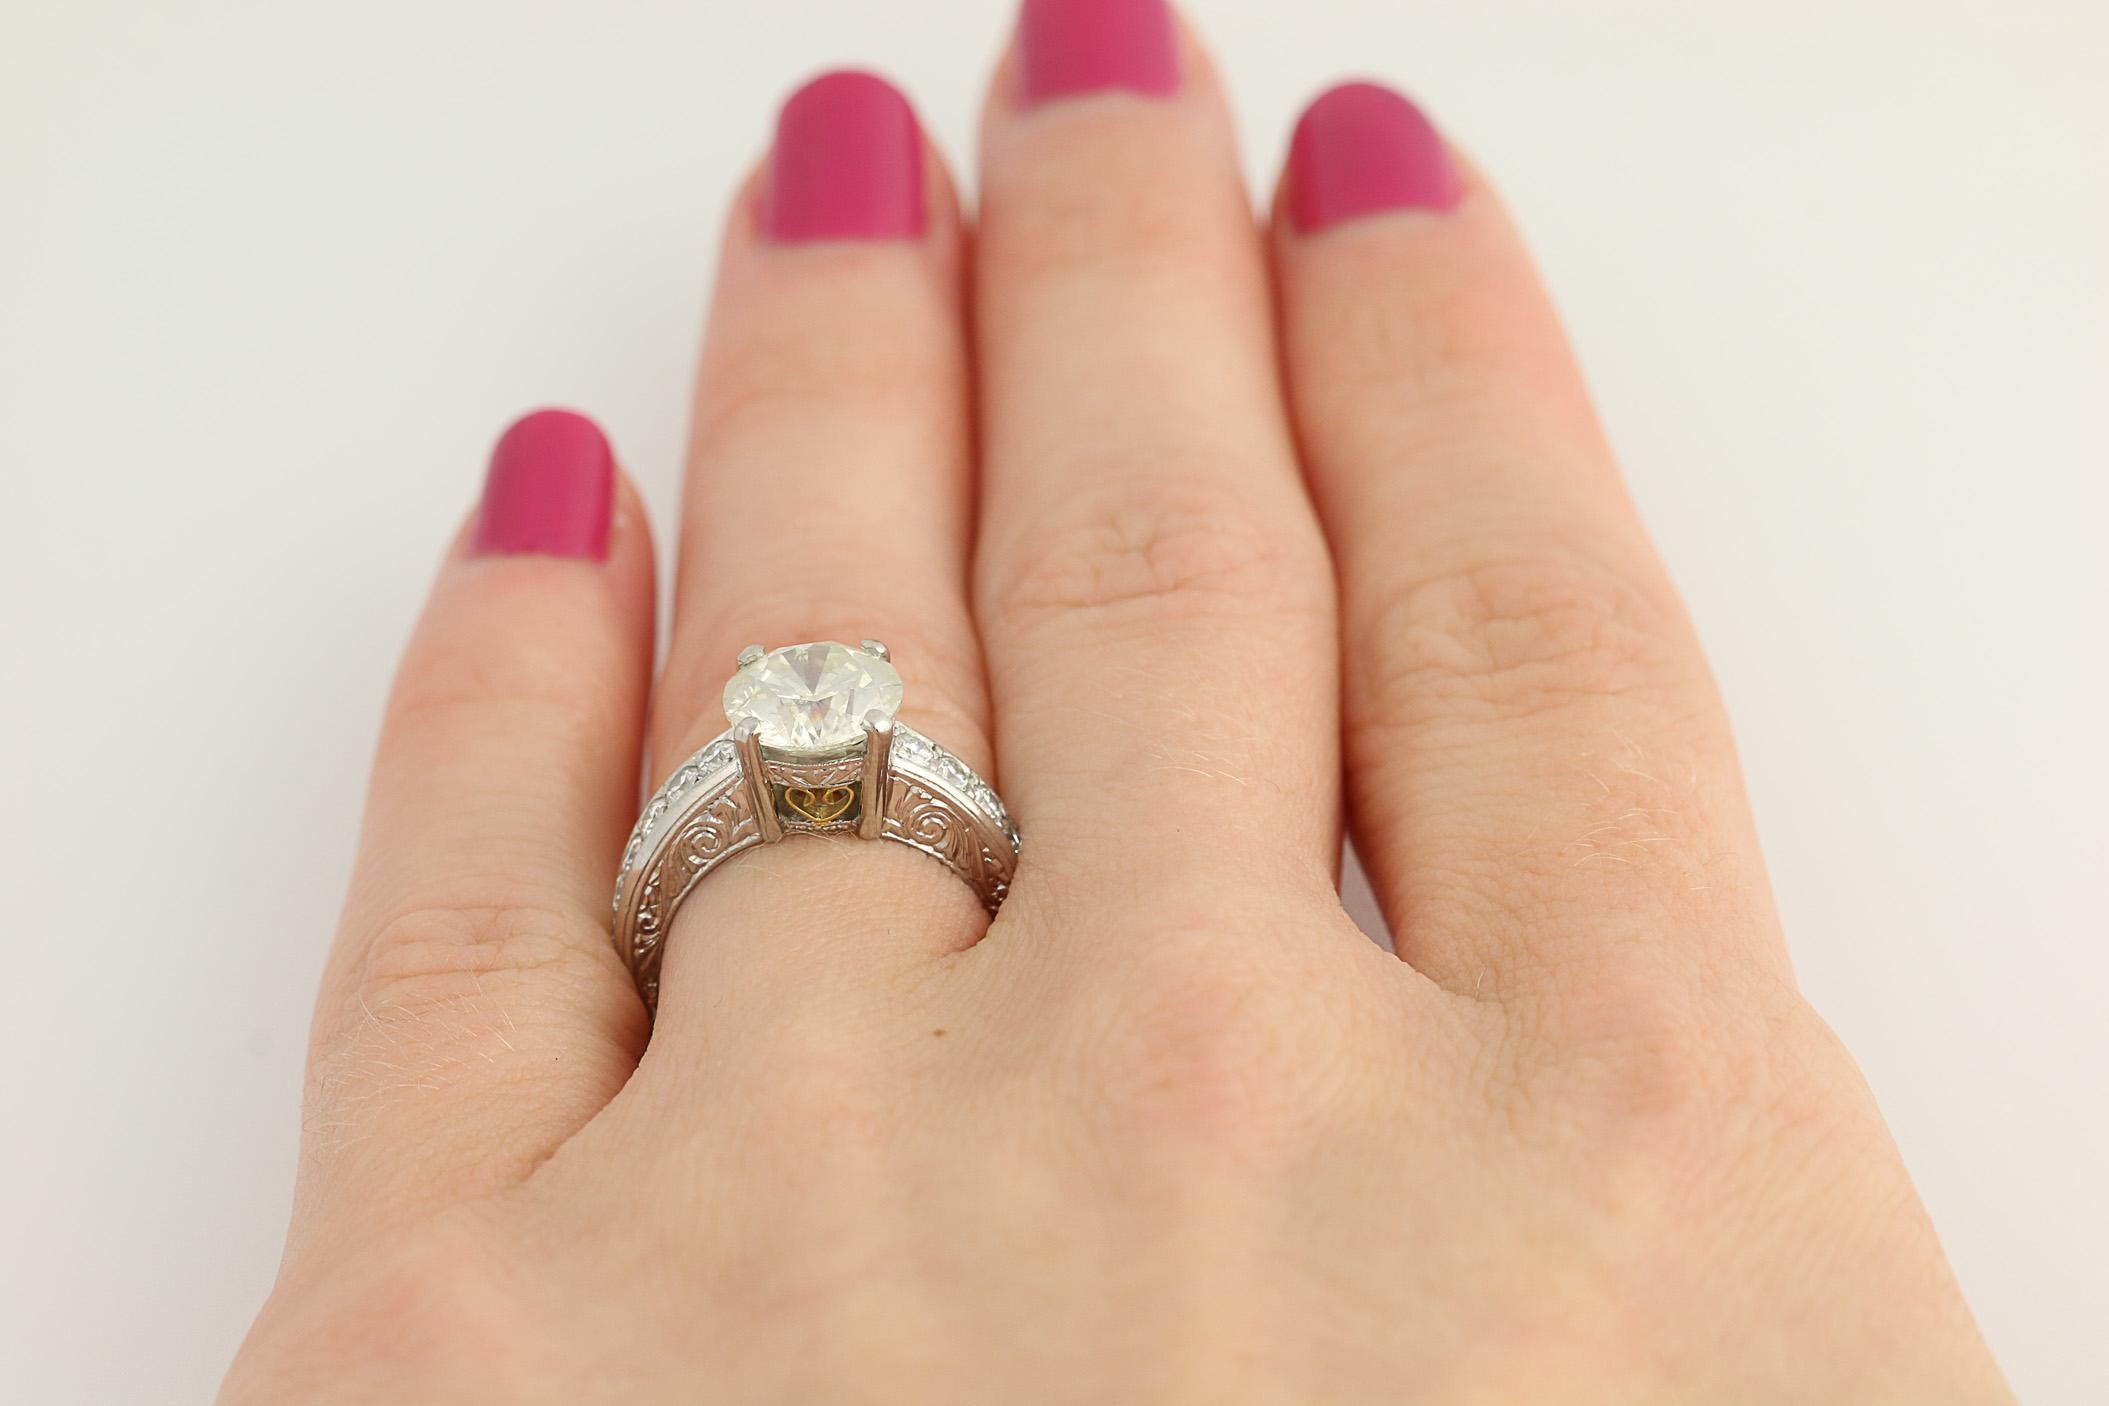 Women's Beaudry Diamond Ring, 900 Platinum and 22 Karat Gold Etched 2.65 Carat